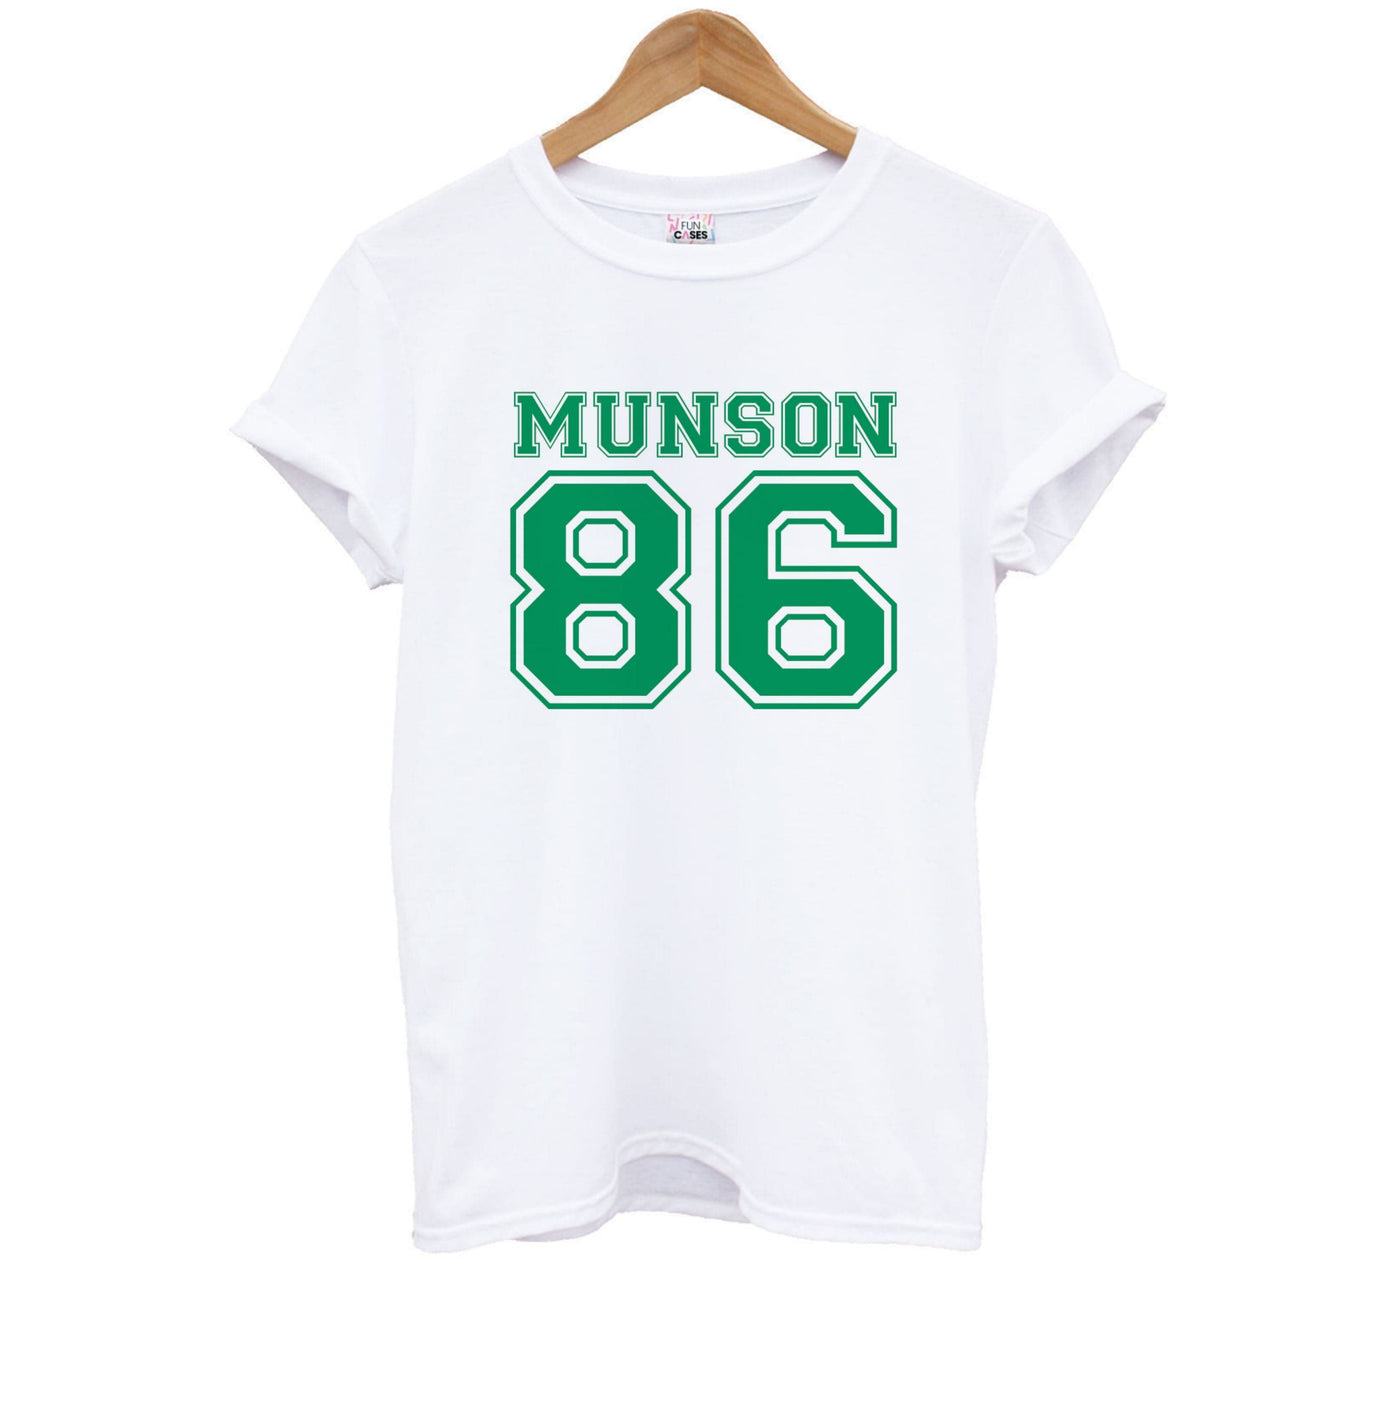 Eddie Munson 86 - Green Kids T-Shirt